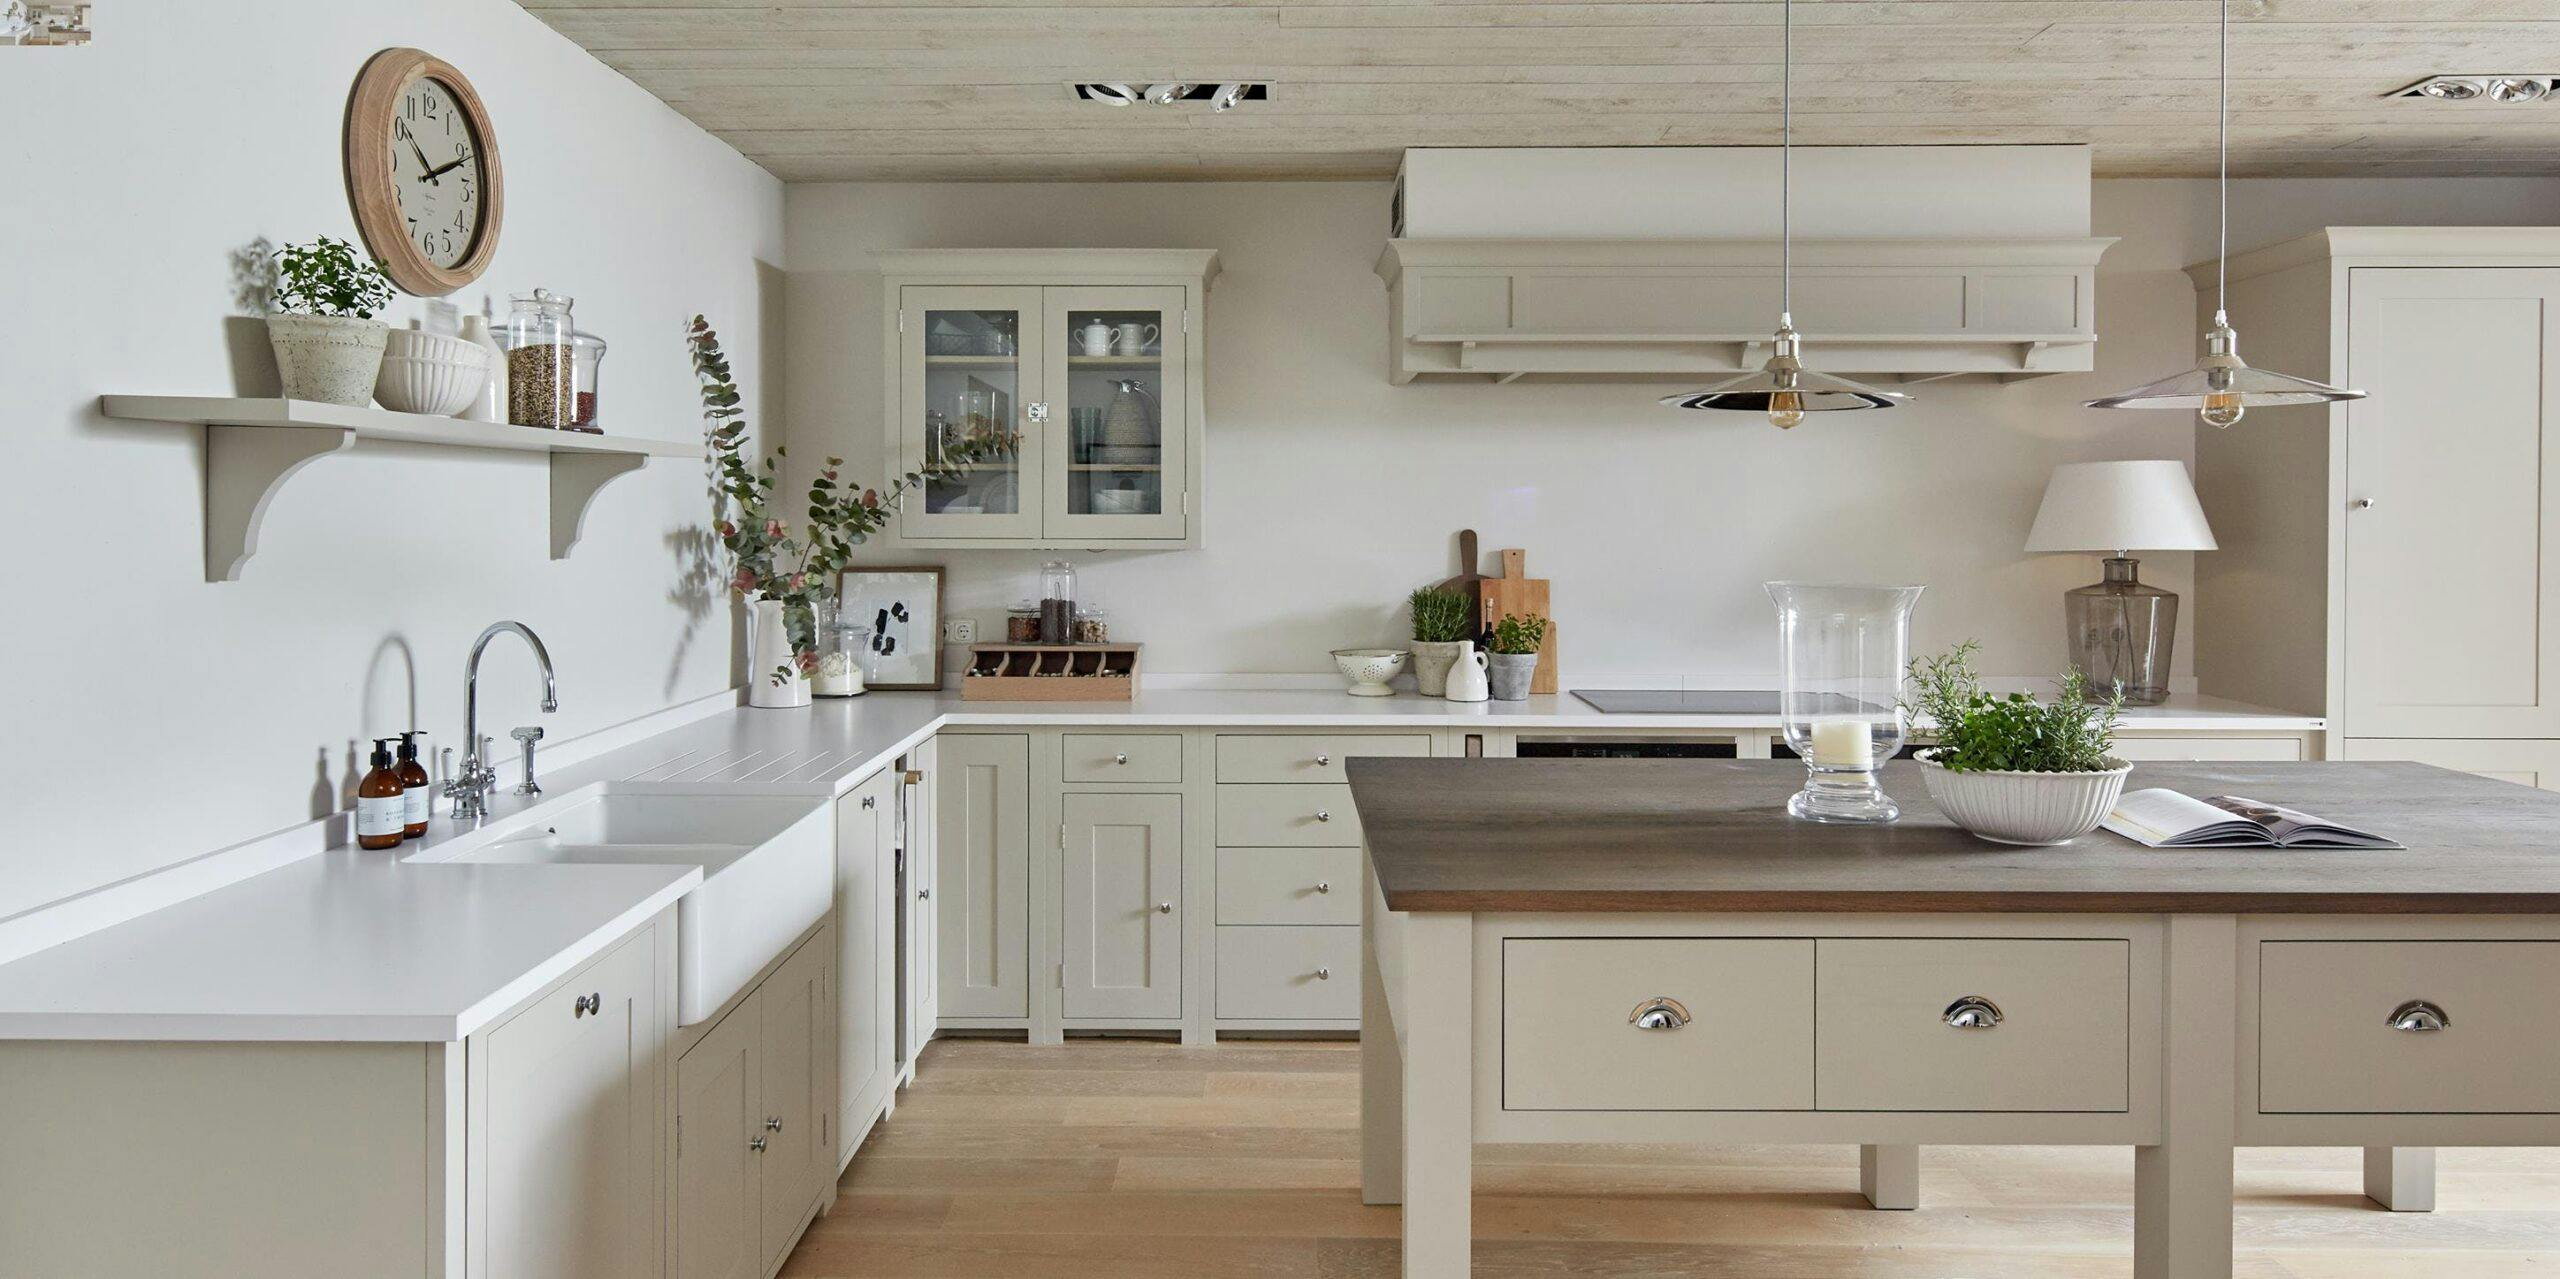 Modern rustic kitchen, neutral walls and natural elements #rustickitchen  #kitcheninspira…